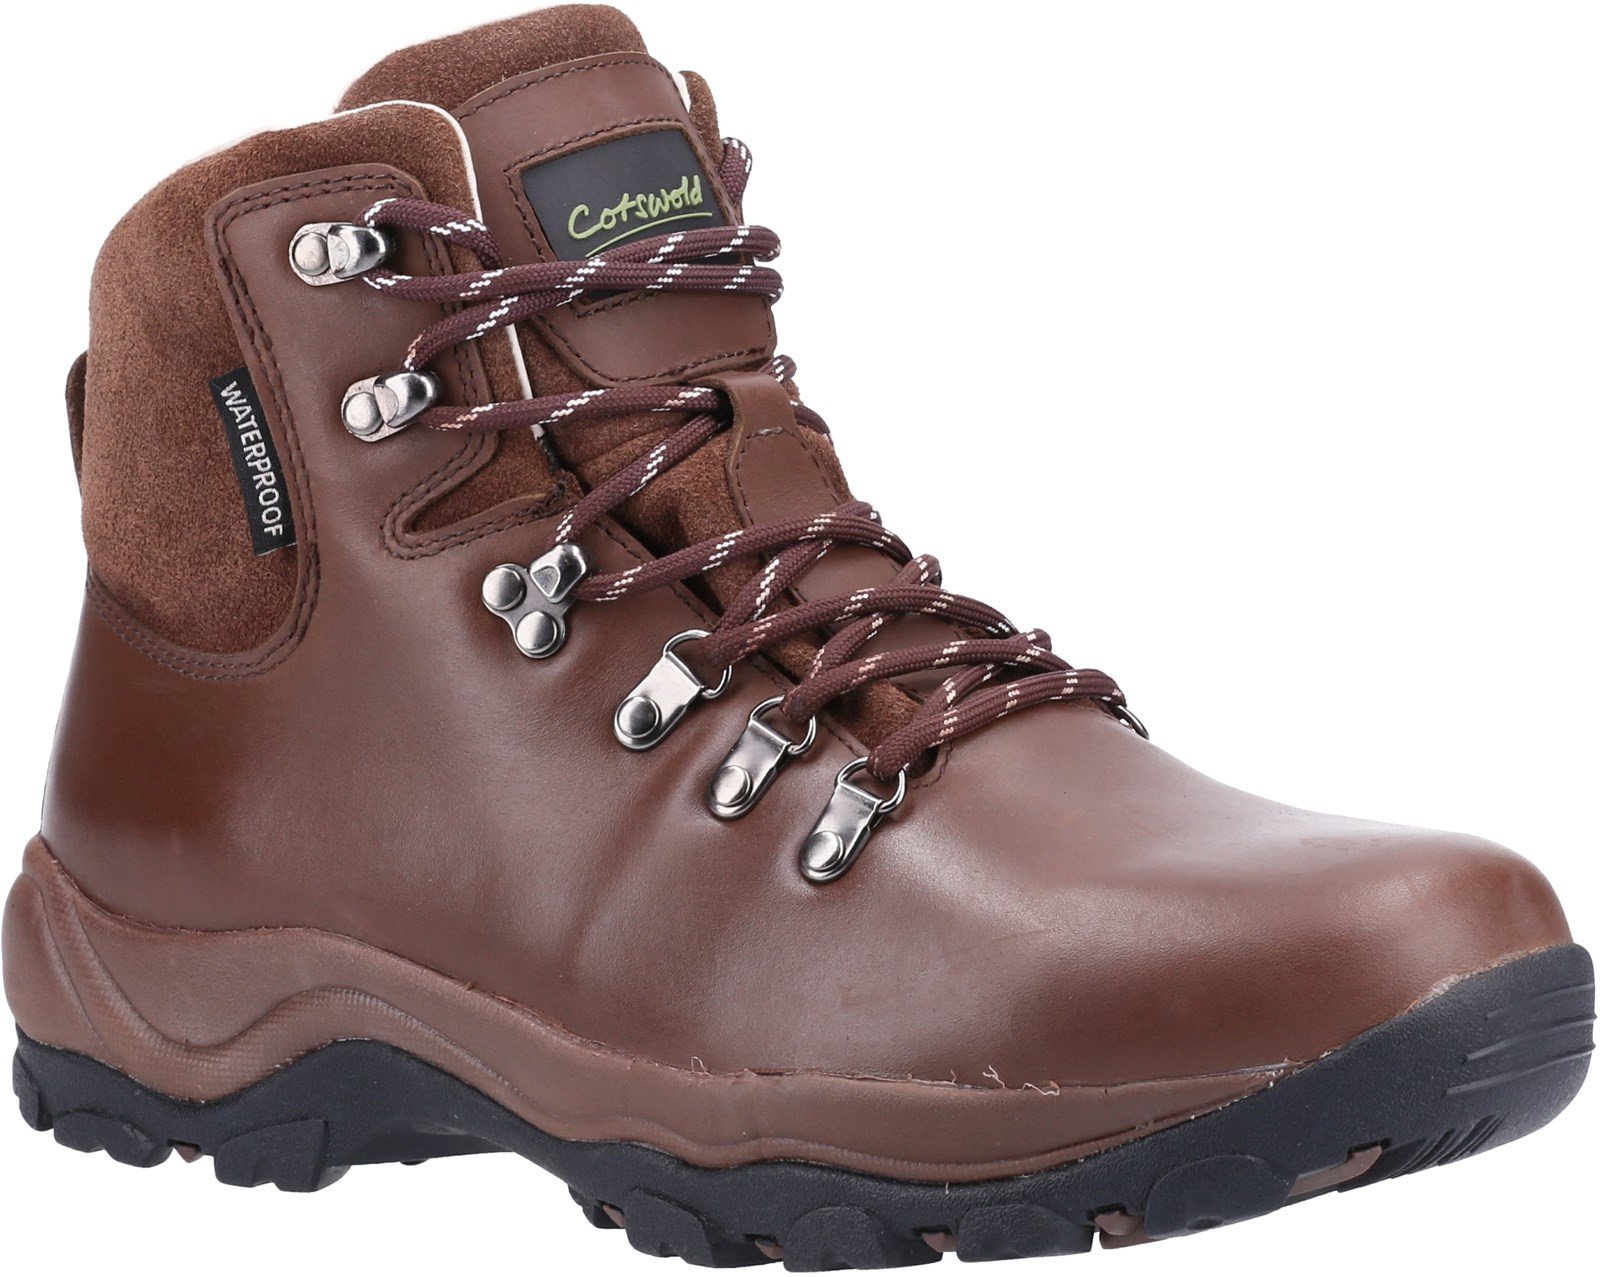 Cotswold Men's Barnwood Hiking Boot Brown 31929 - Brown 7